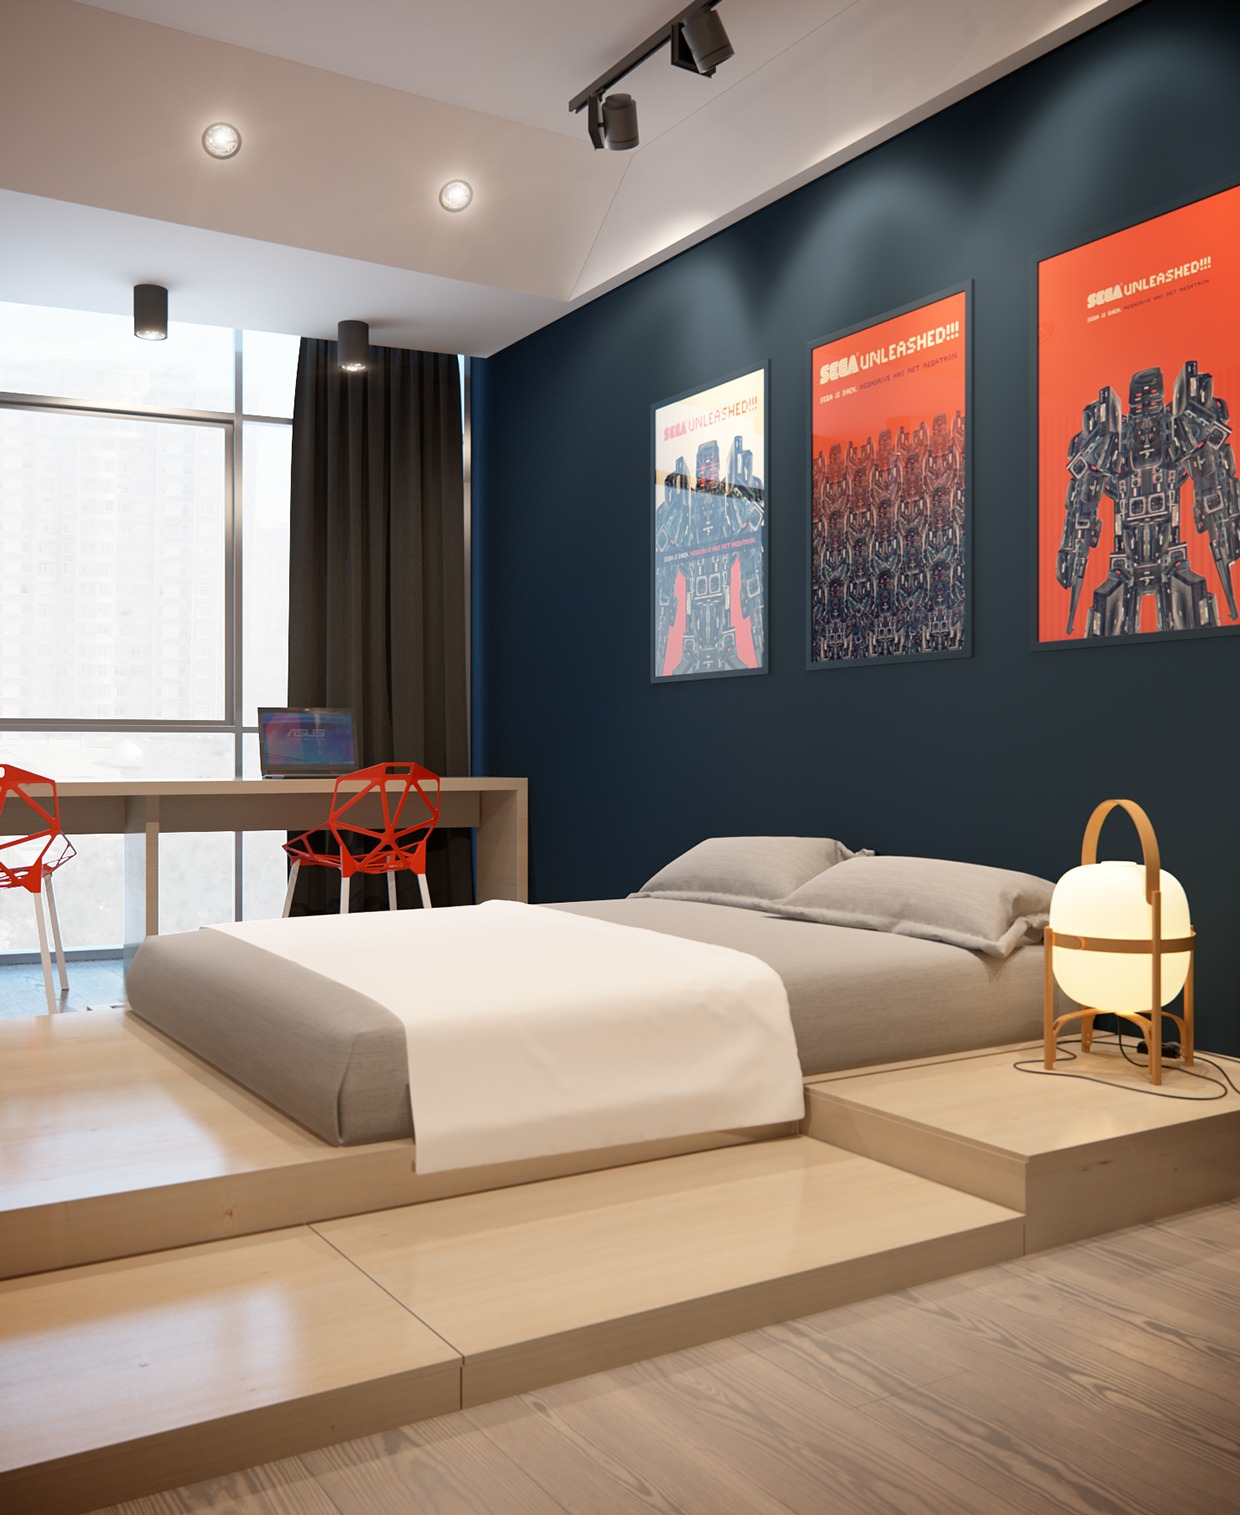 Single bedroom apartment design ideas